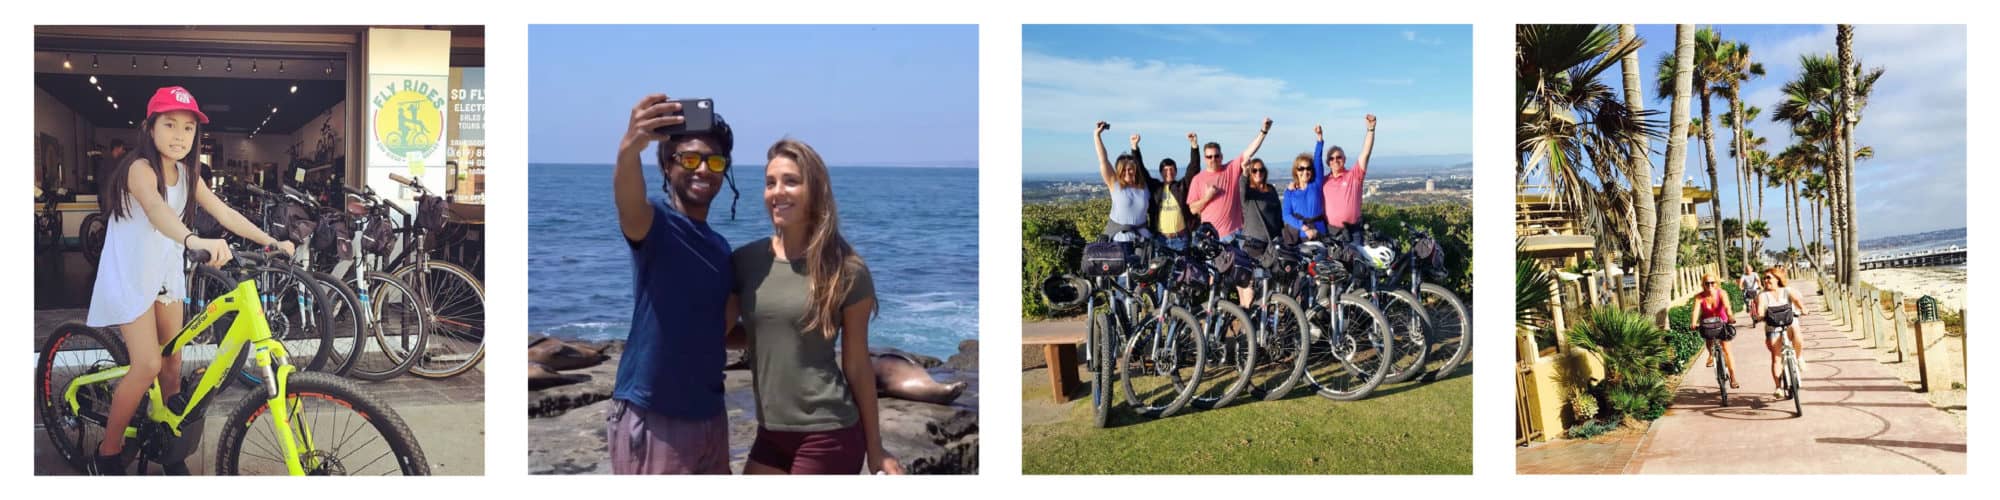 San Diego ebike tours La Jolla tour